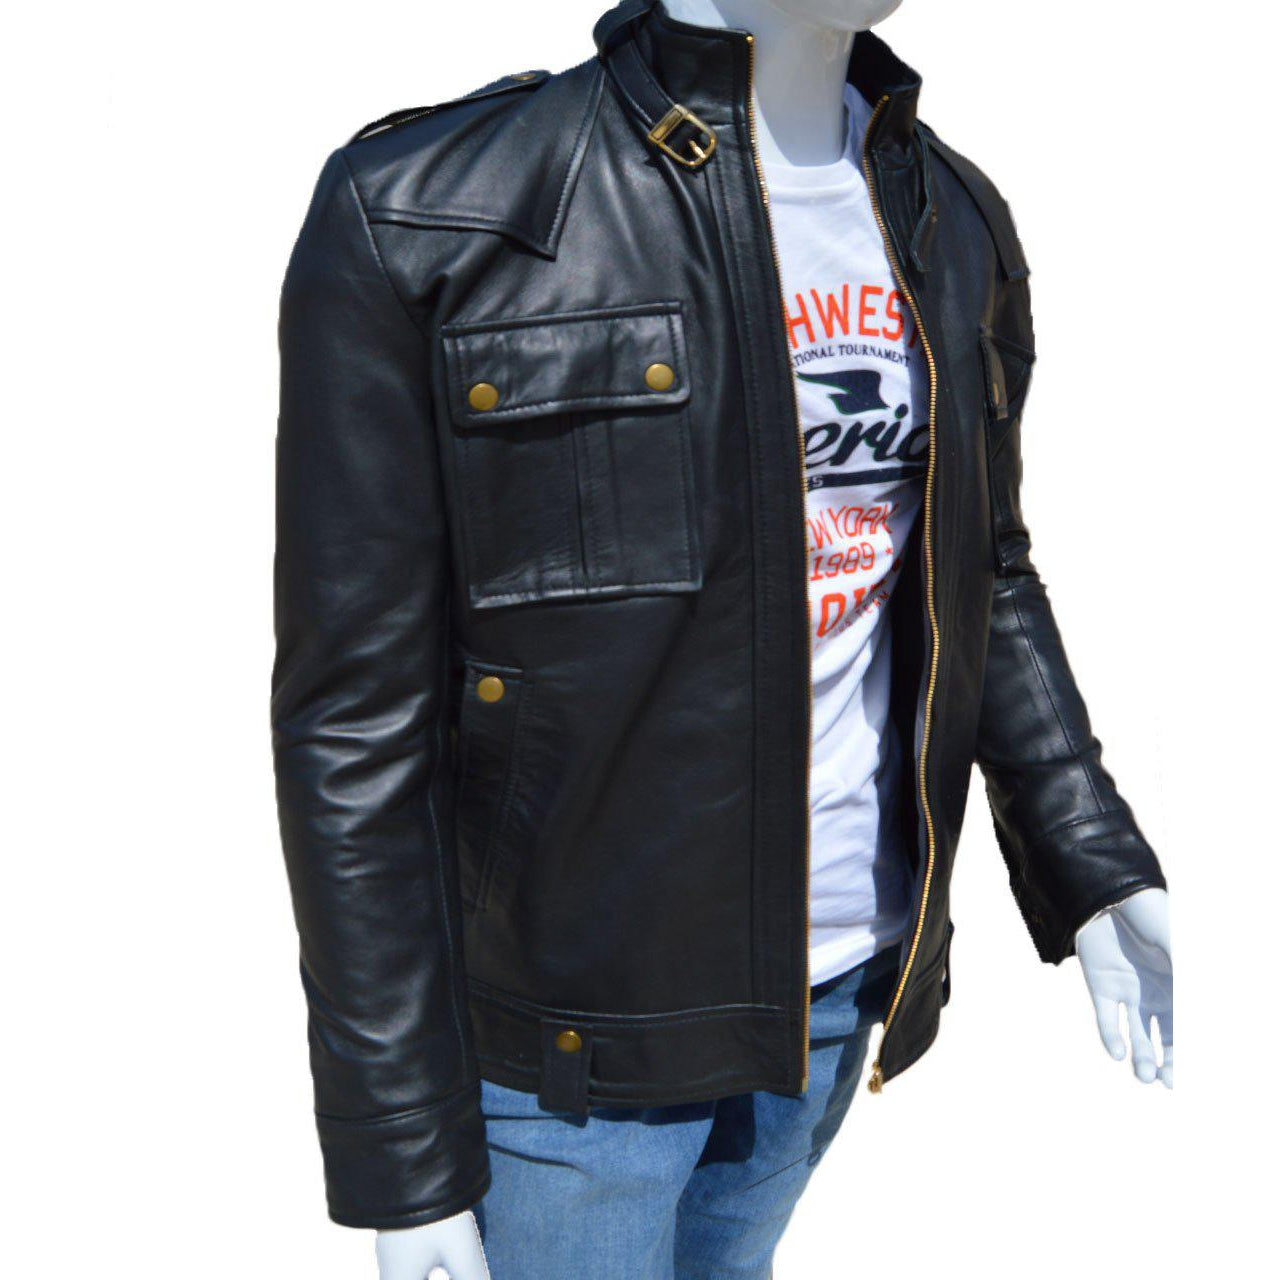 Black Stylish Leather Jacket with Front Pockets for Men - Leather Jacket